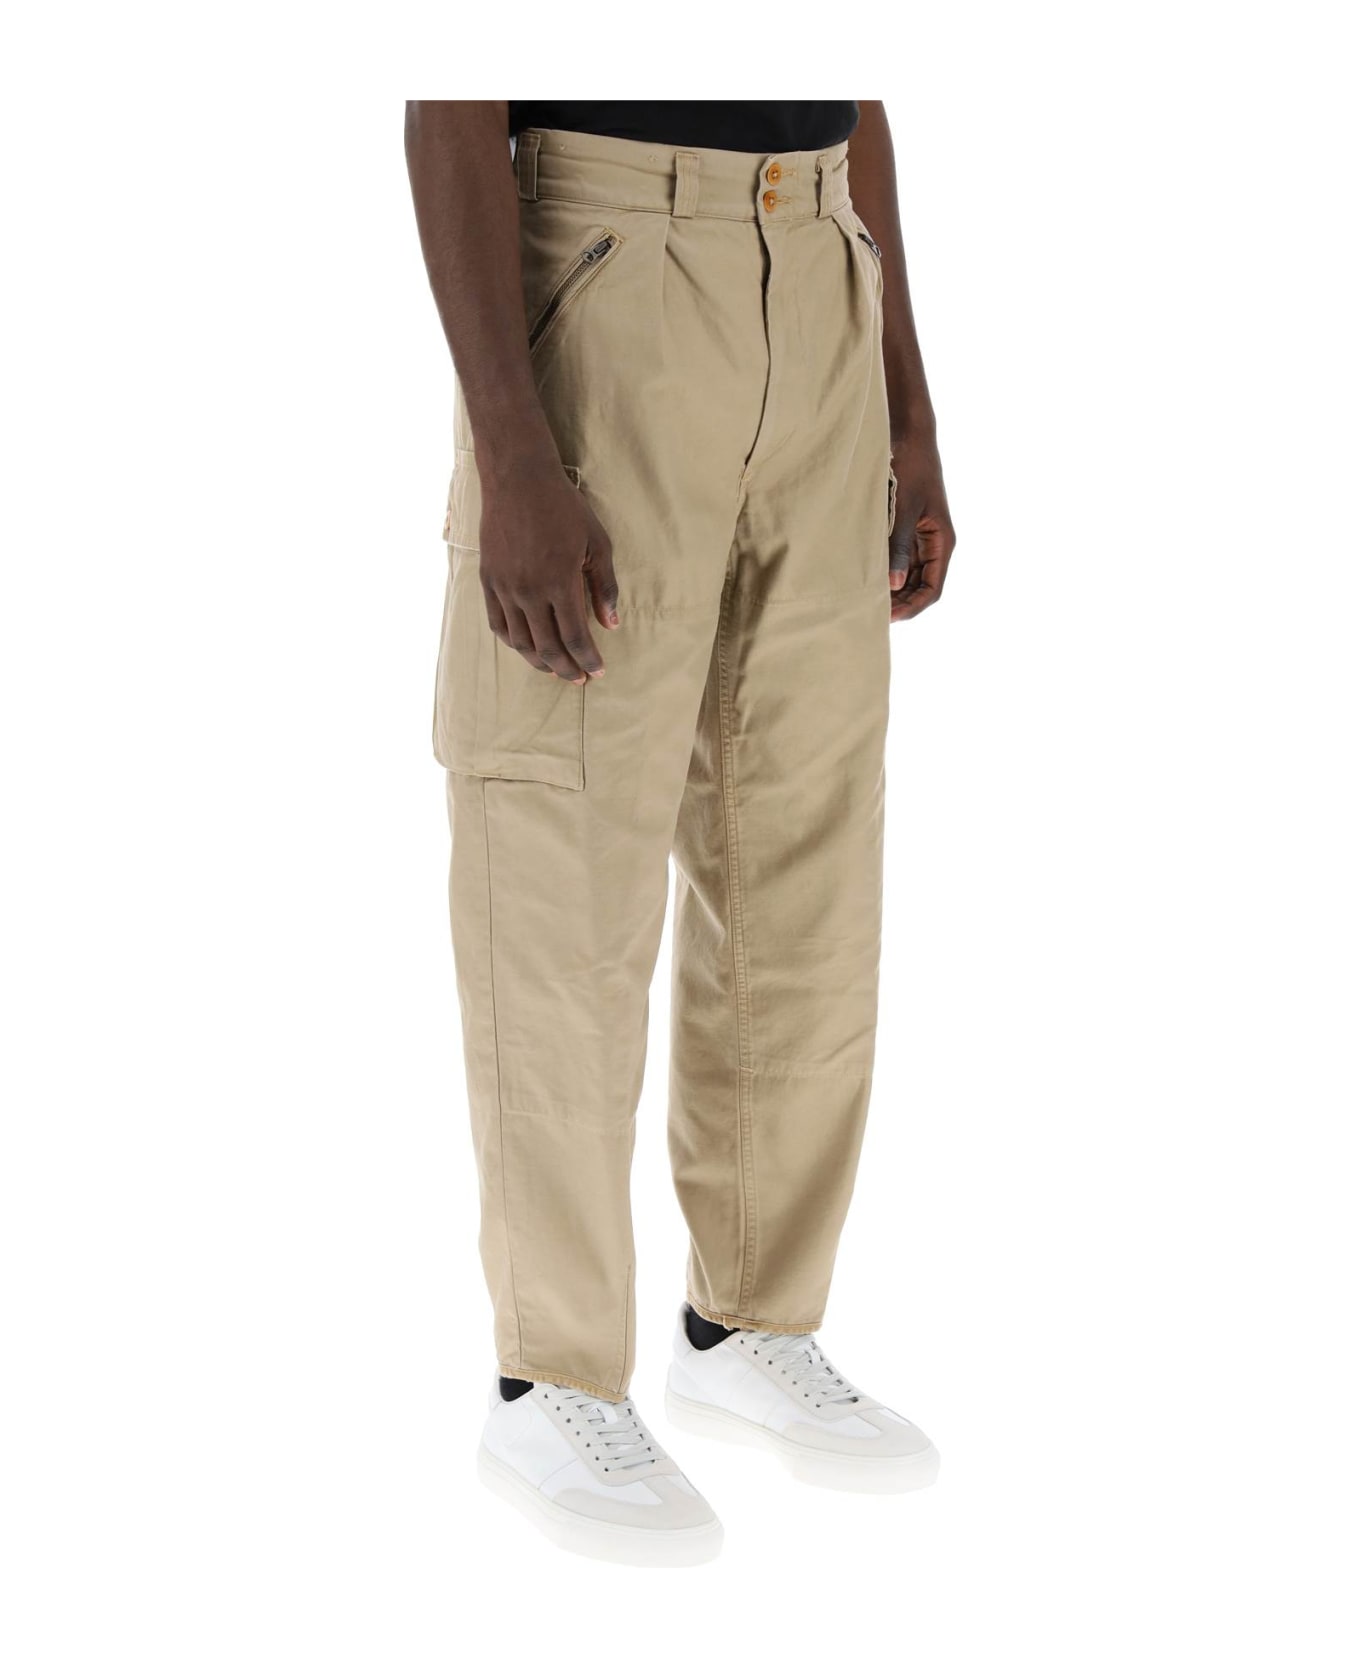 Polo Ralph Lauren Cotton Cargo Pants - DESERT KHAKI (Beige)